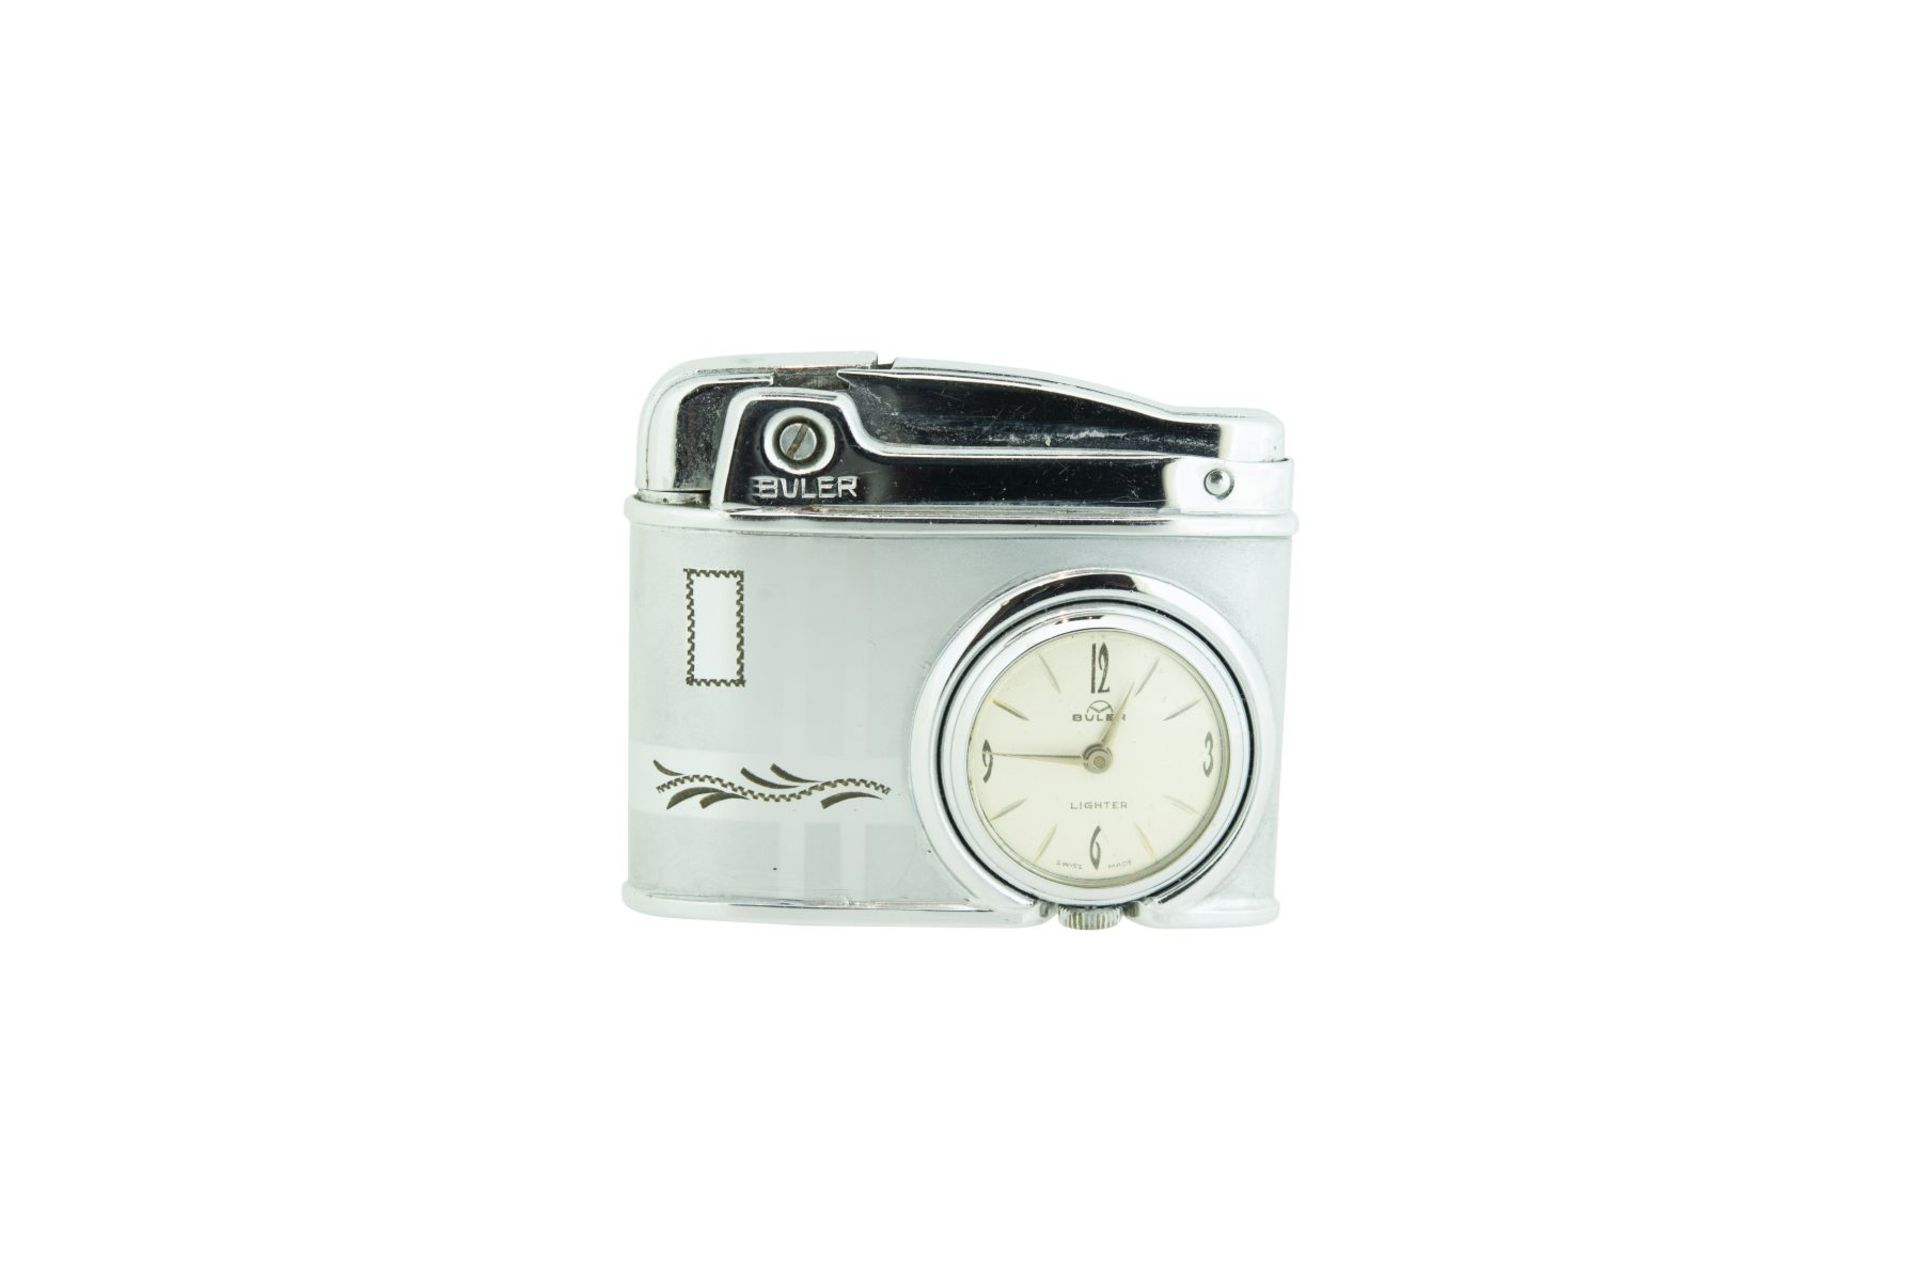 Buler Handaufzug Uhr mit Benzinfeuerzeug - Image 2 of 3